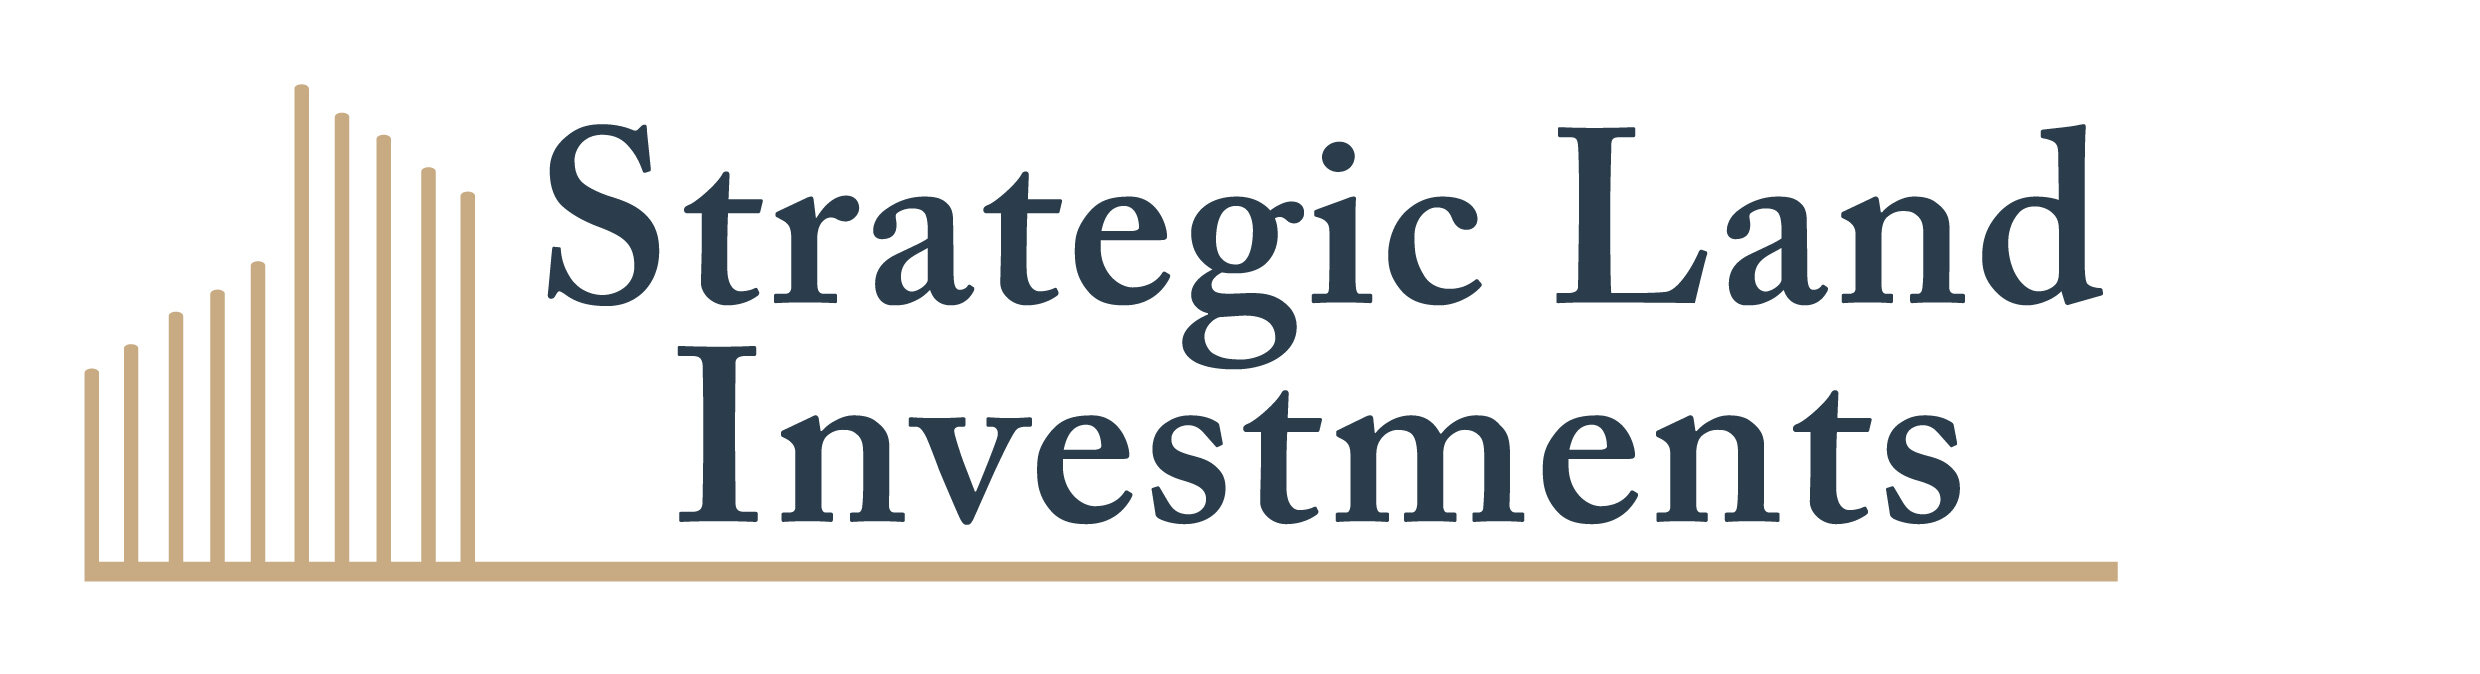 Strategic Land Investments Logo.jpg